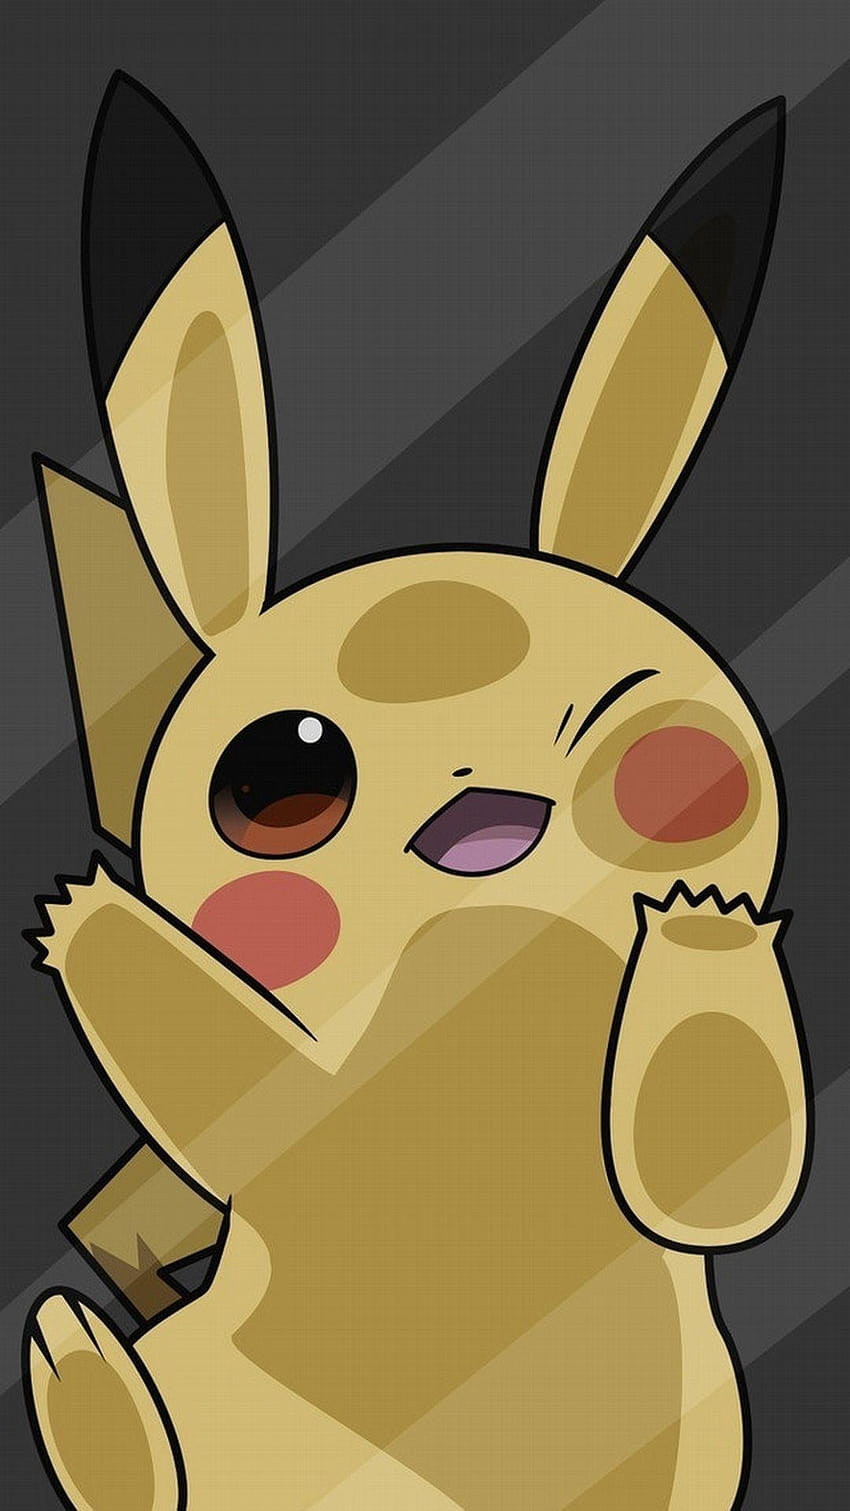 Ash's Pikachu may evolve into Raichu in the latest season of Pokémon Journey